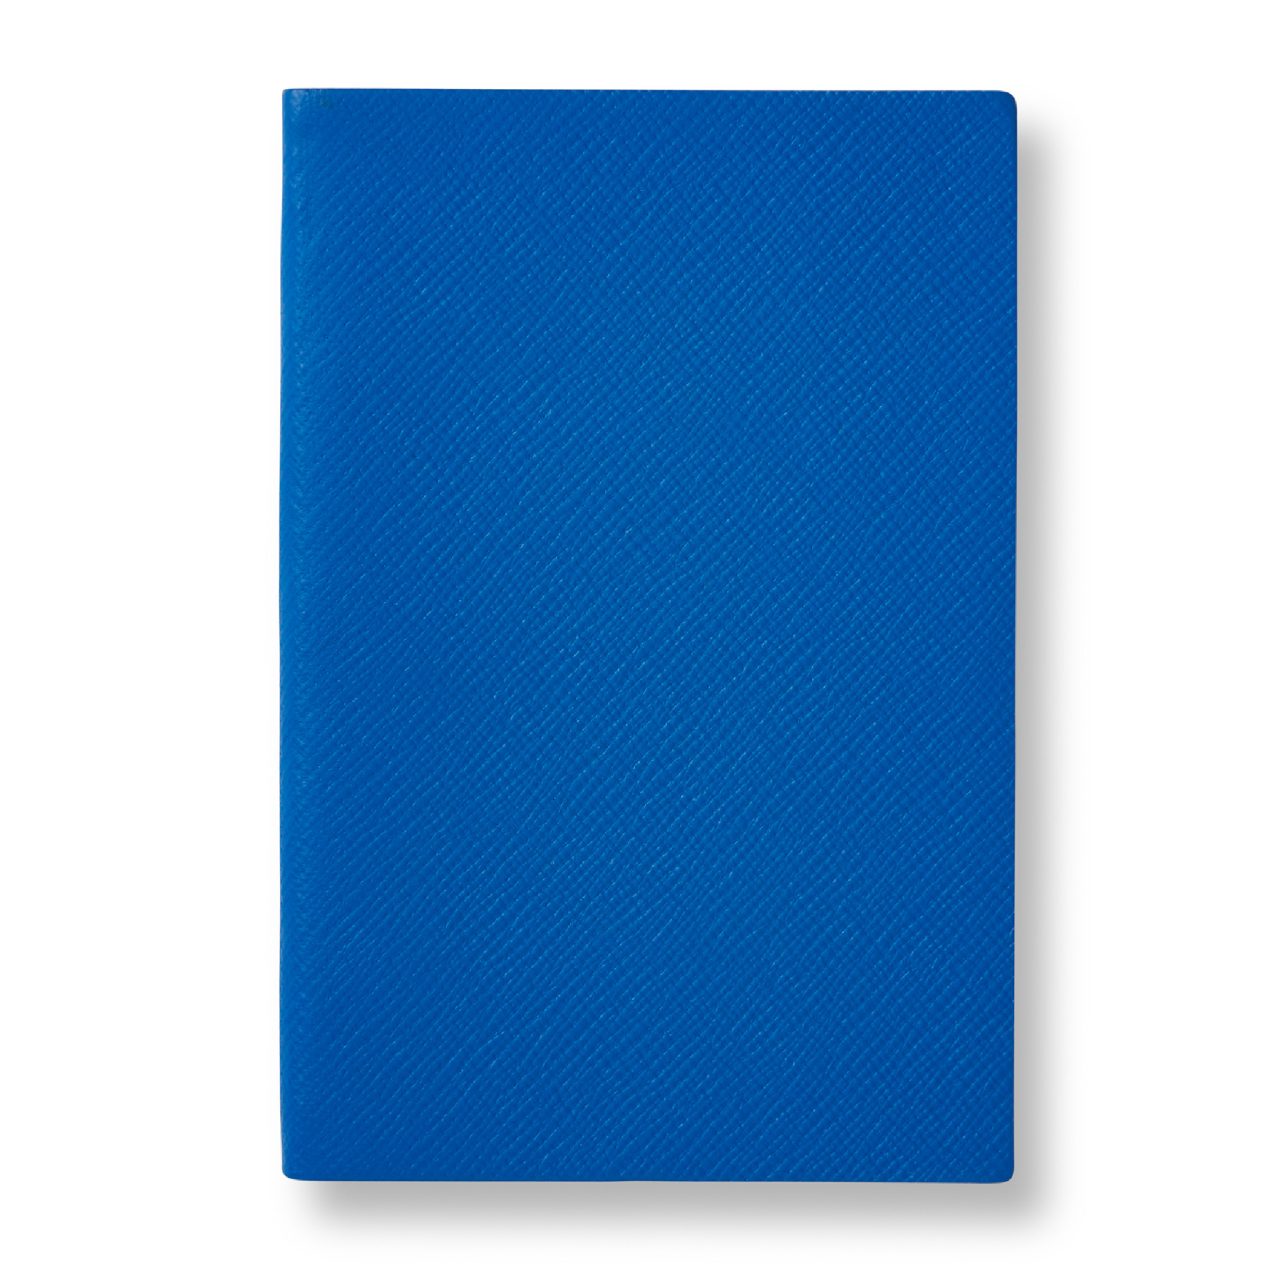 Chelsea Notebook in Panama in lapis